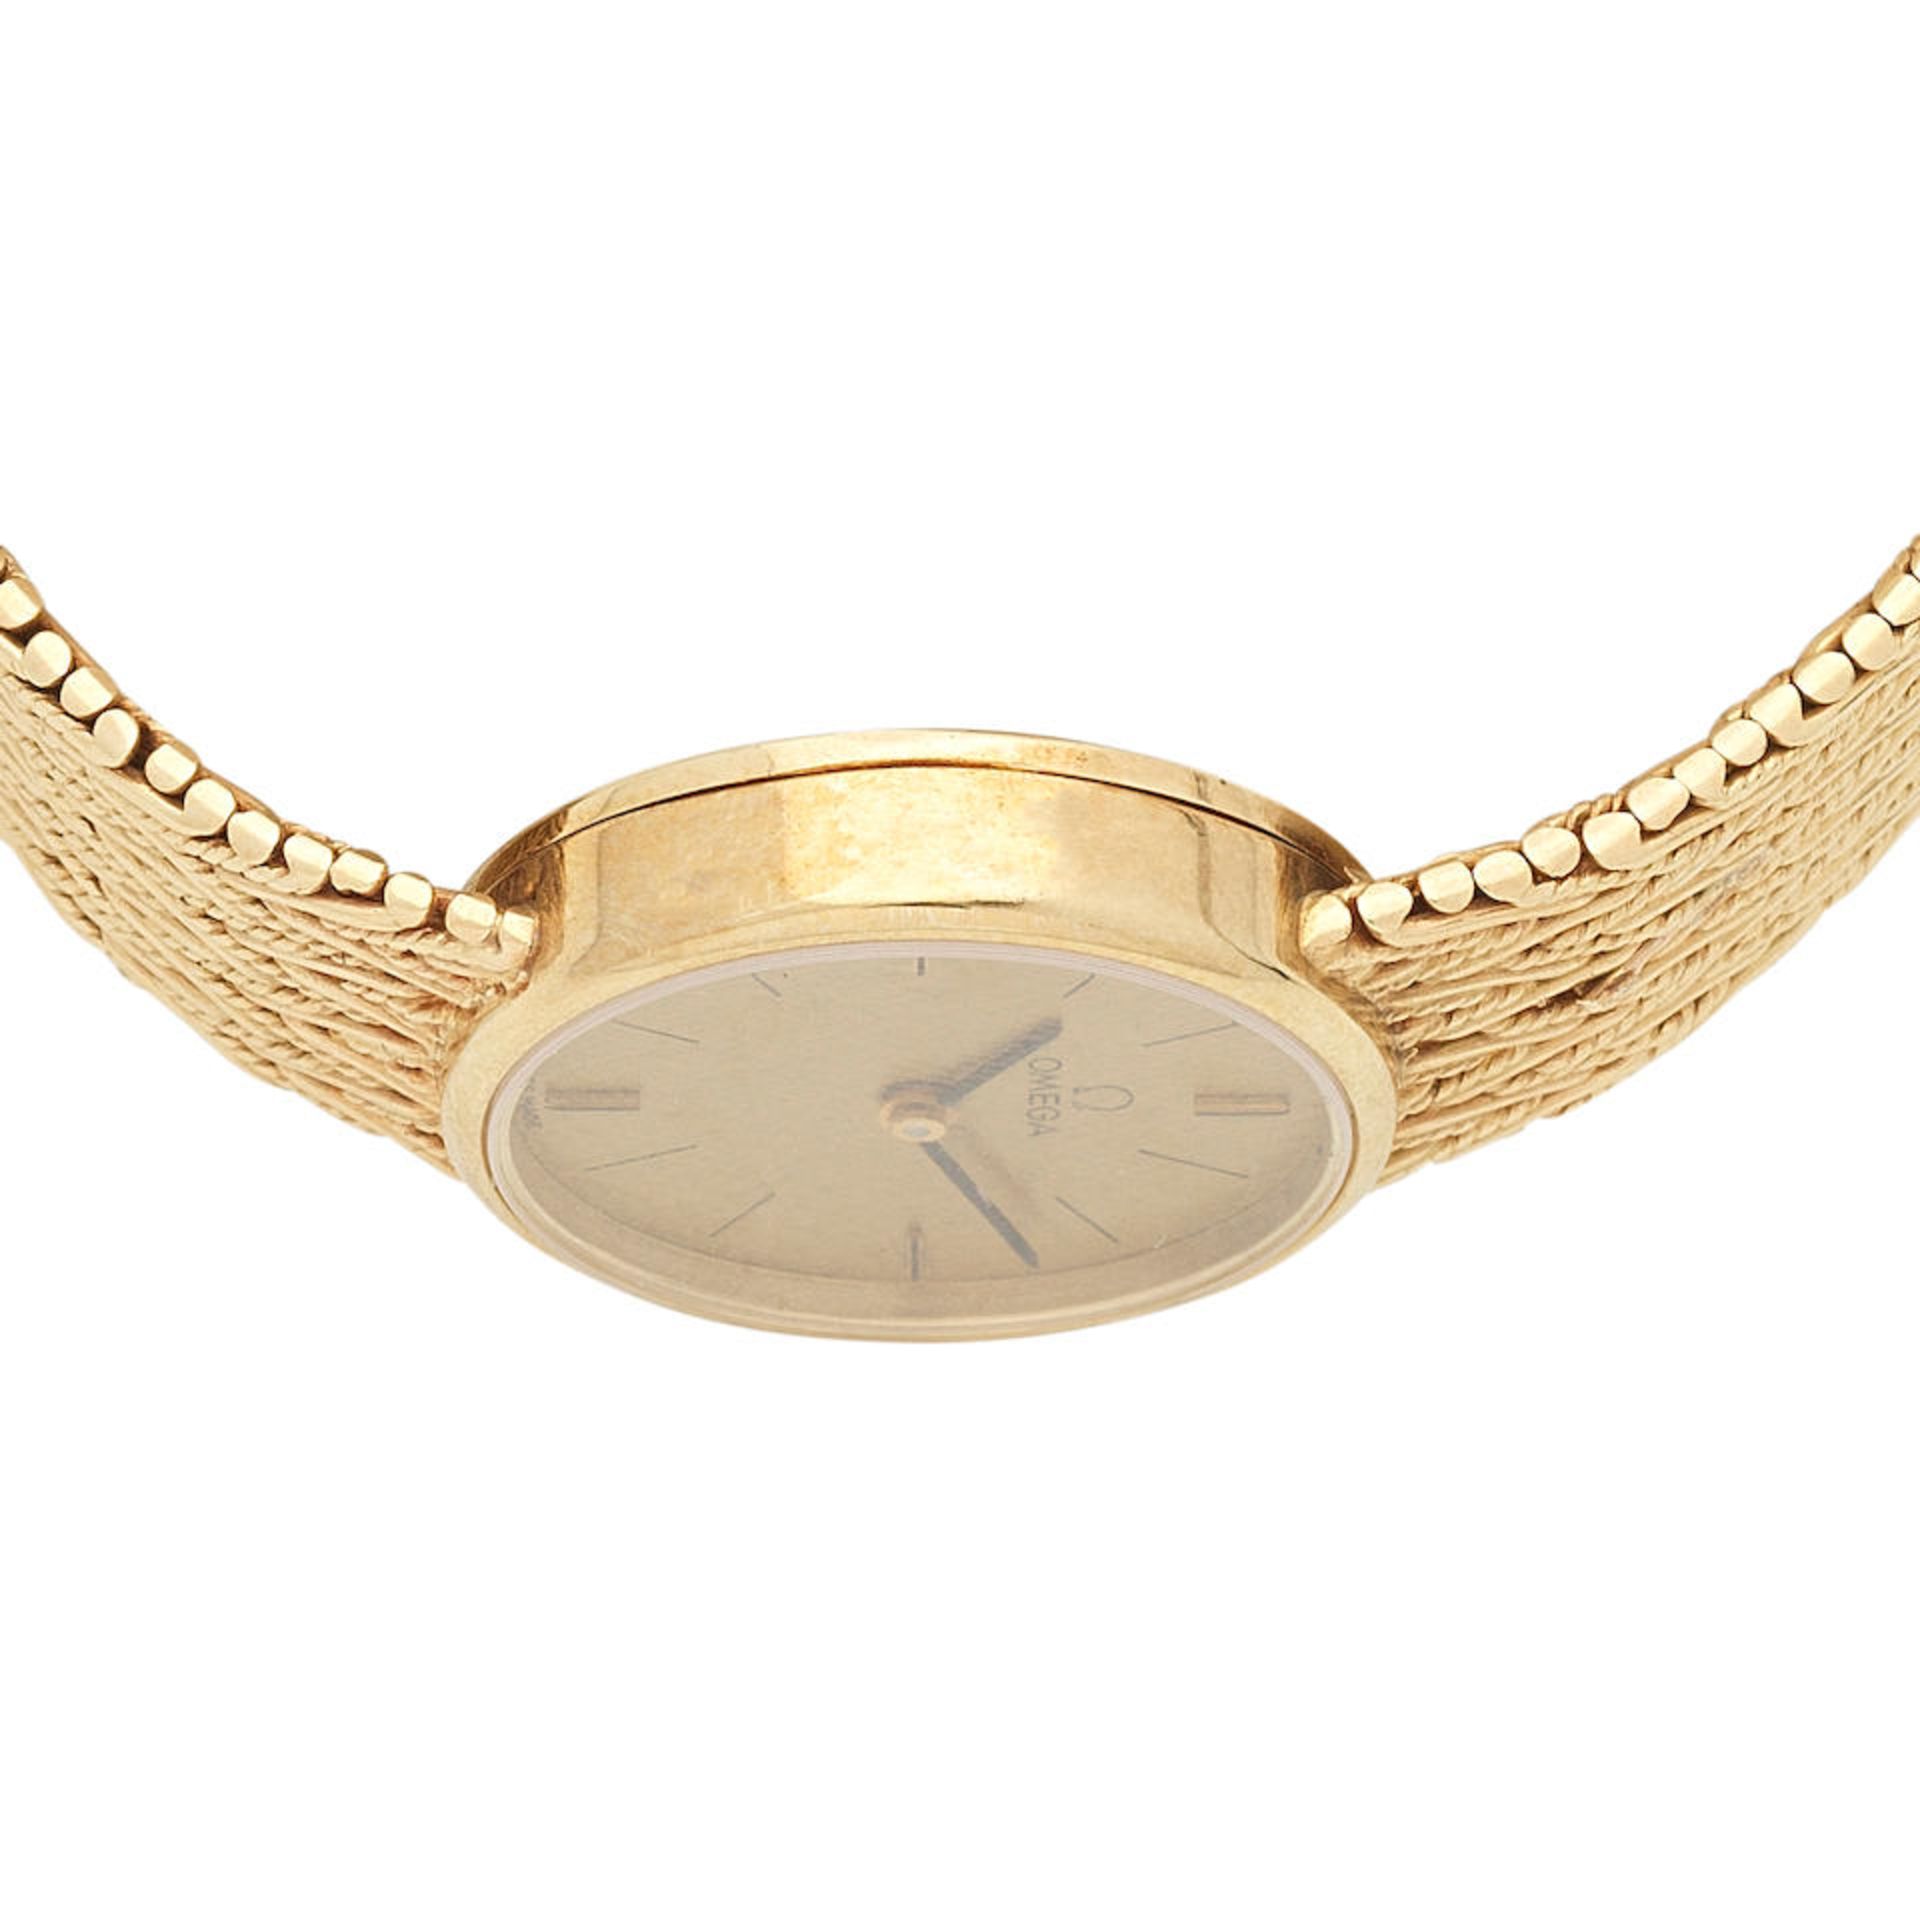 Omega. A lady's 14K gold manual wind bracelet watch Circa 1978 - Image 2 of 4